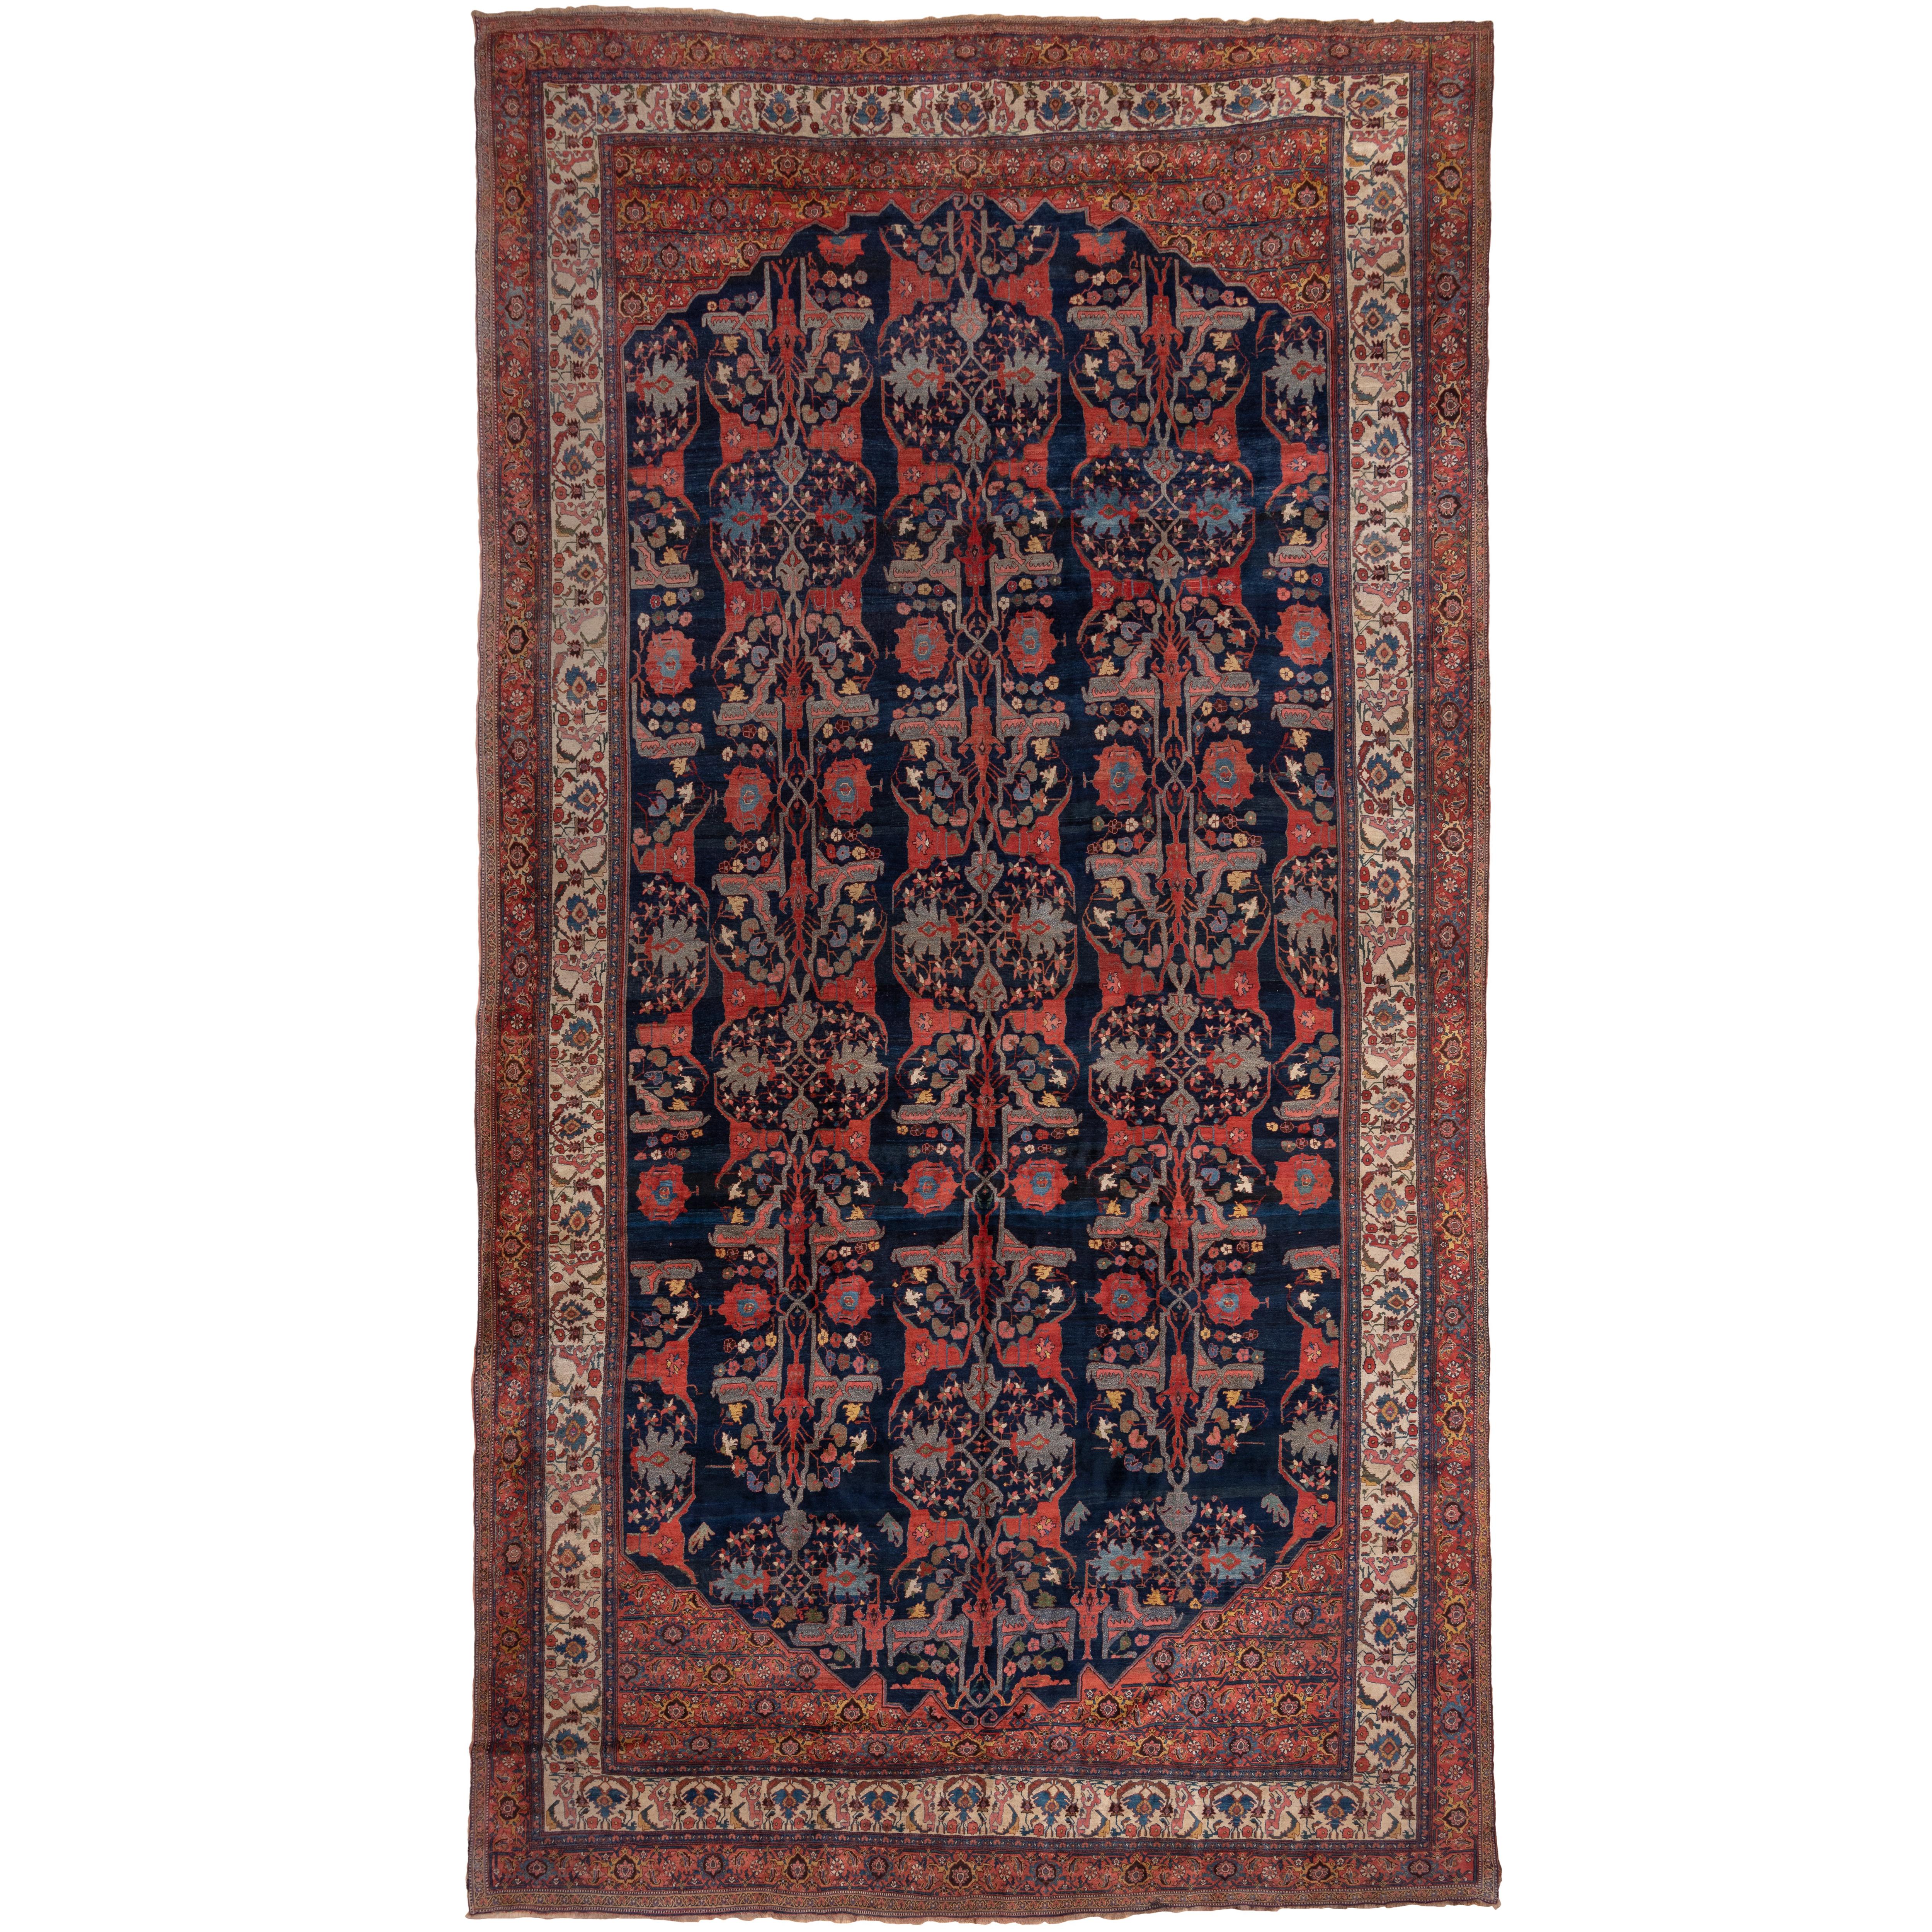 Late 19th Century Bidjar Mansion Carpet